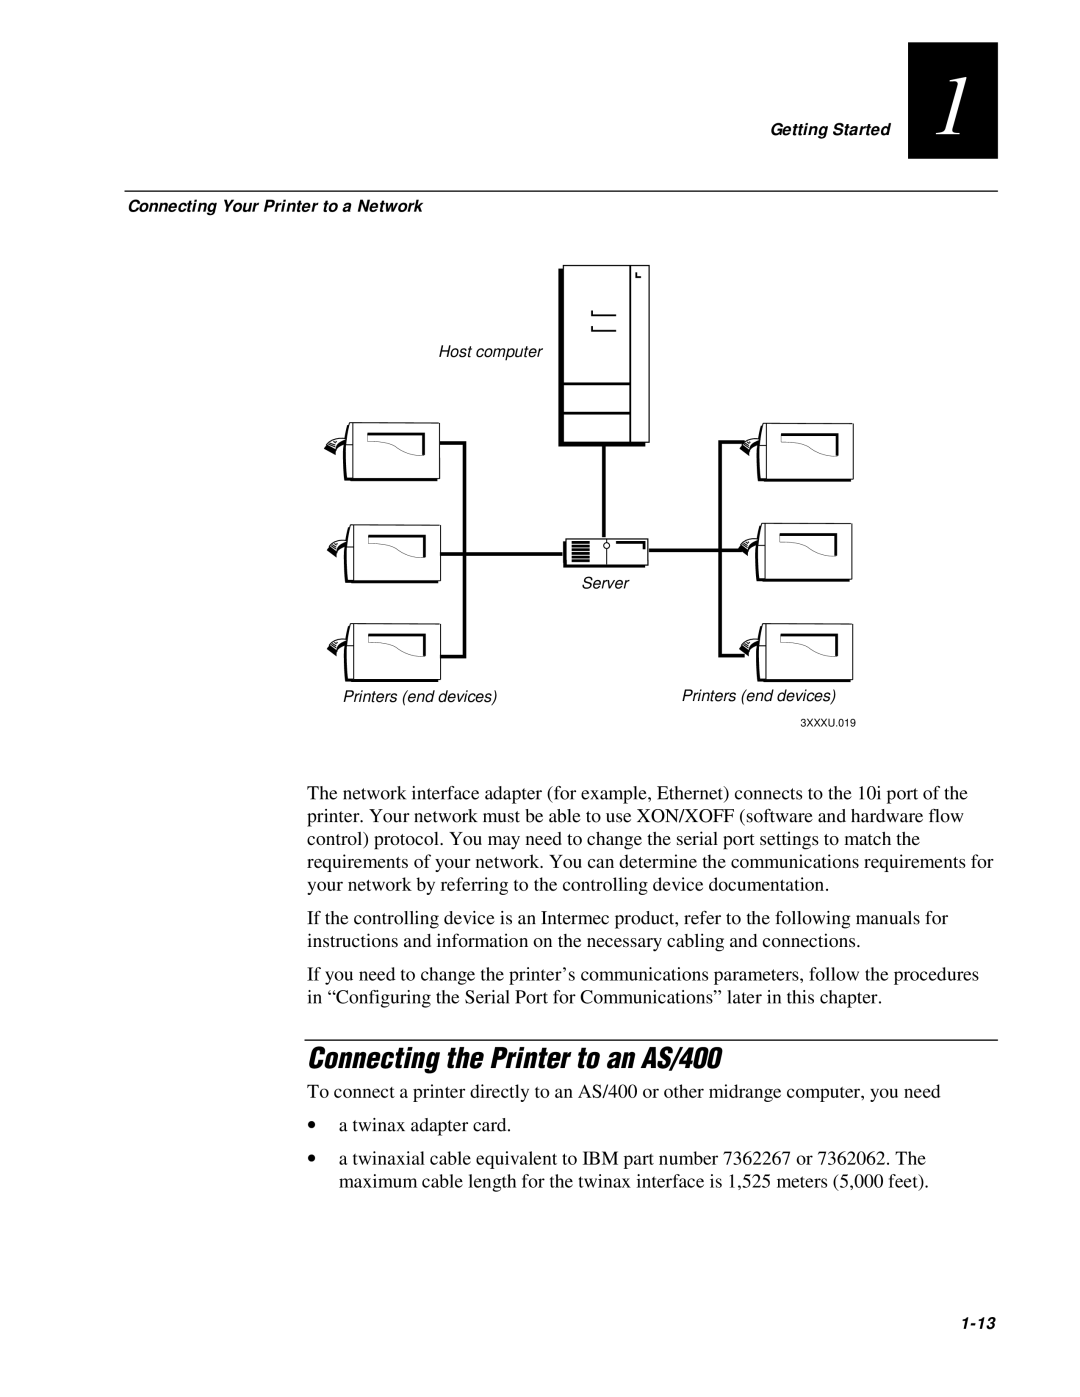 IBM EasyCoder 3400e user manual Connecting the Printer to an AS/400, Connecting Your Printer to a Network, 1-13 